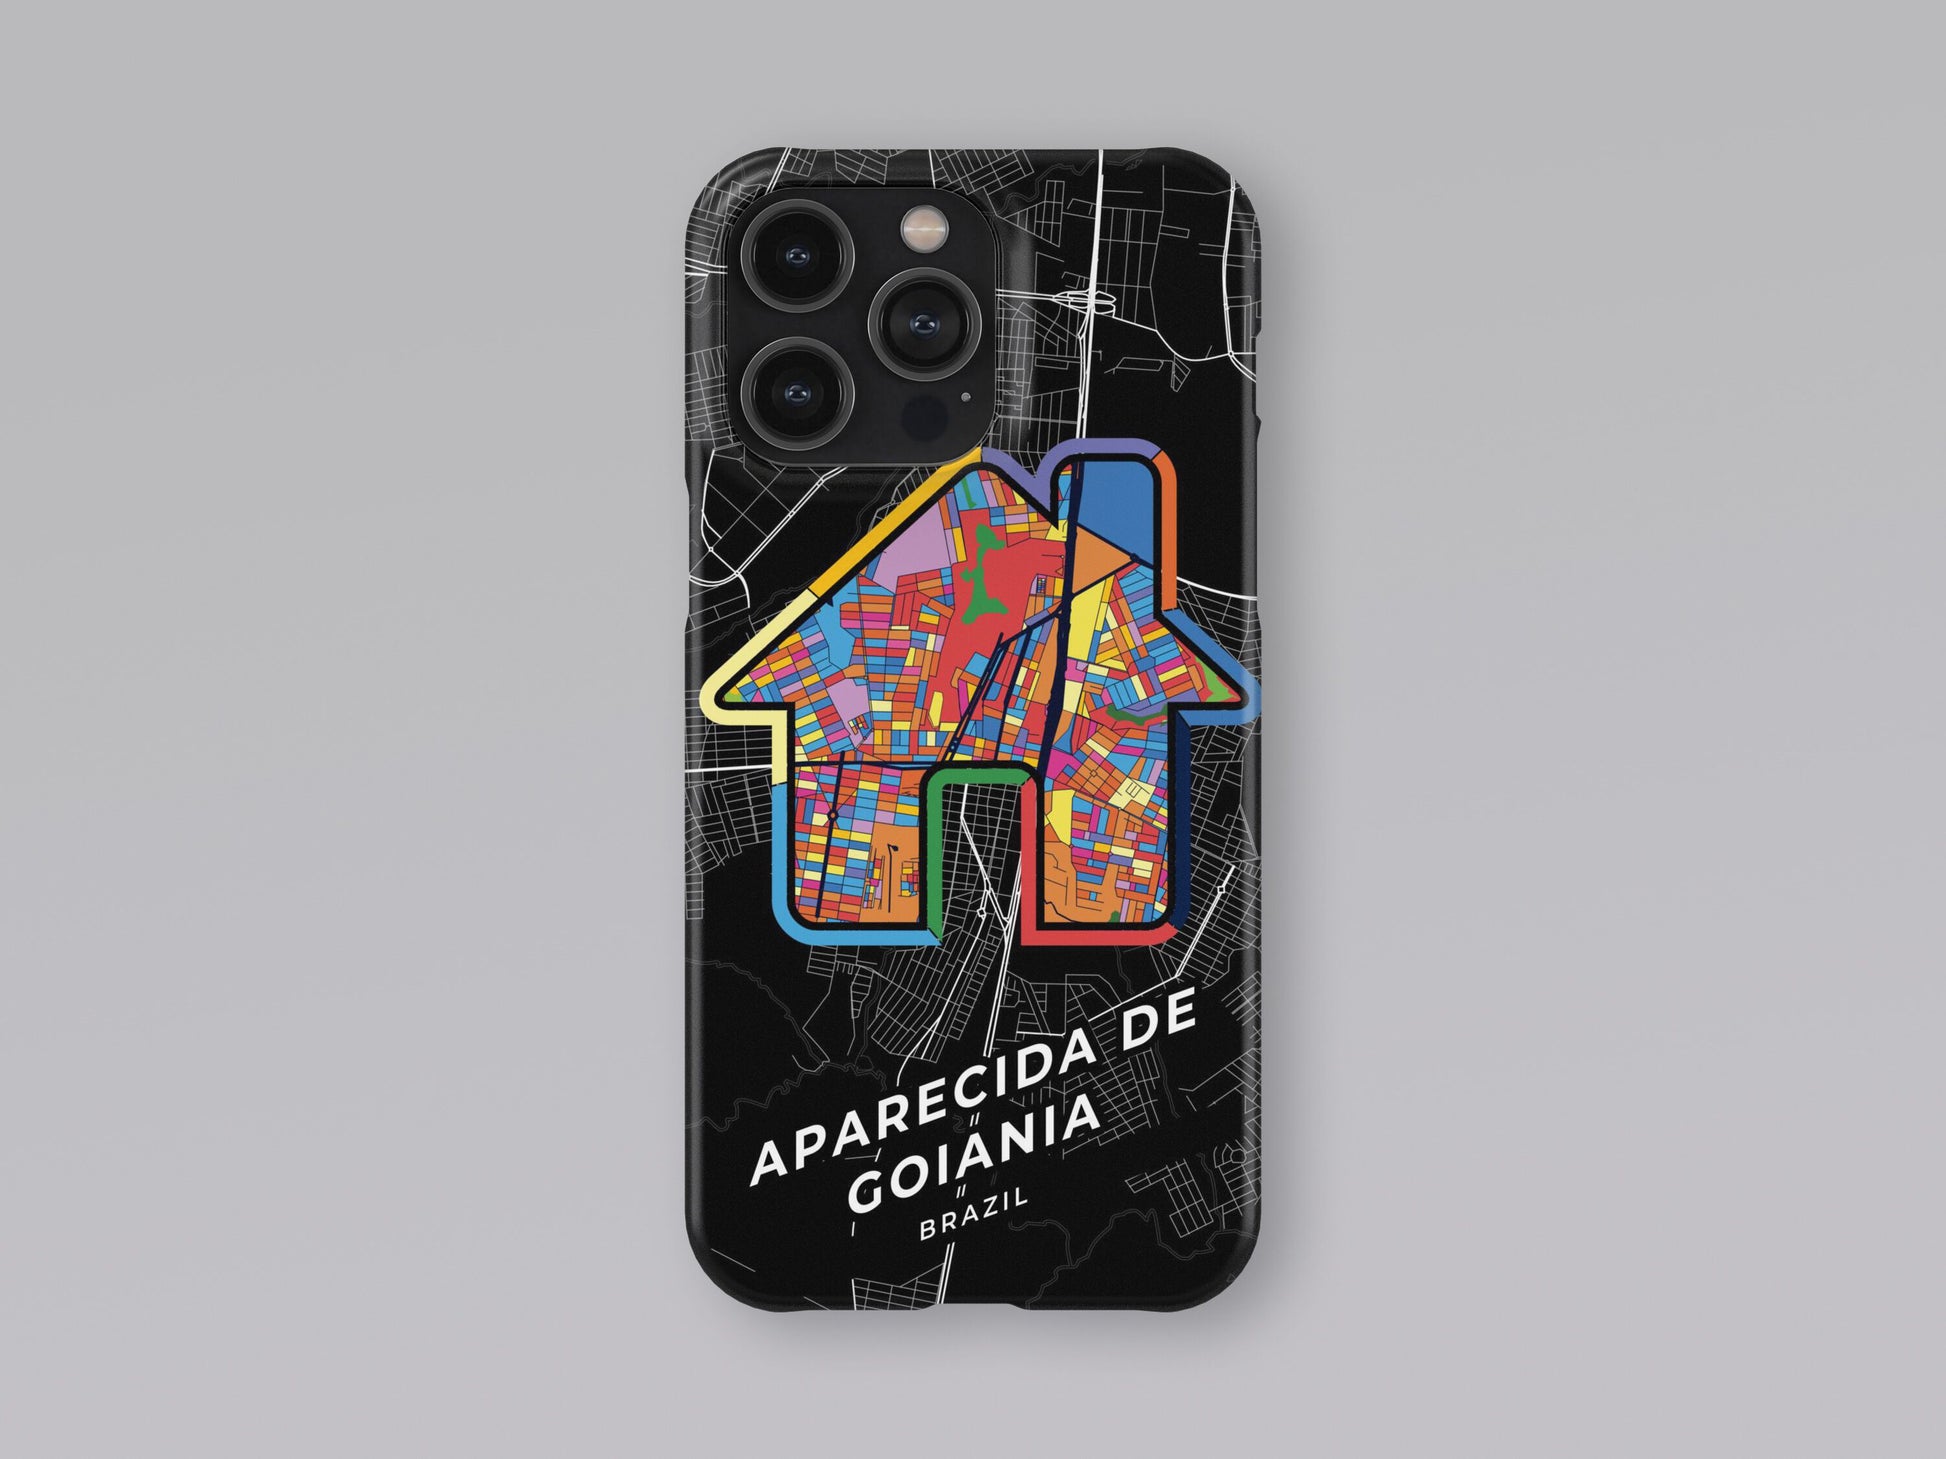 Aparecida De Goiania Brazil slim phone case with colorful icon. Birthday, wedding or housewarming gift. Couple match cases. 3